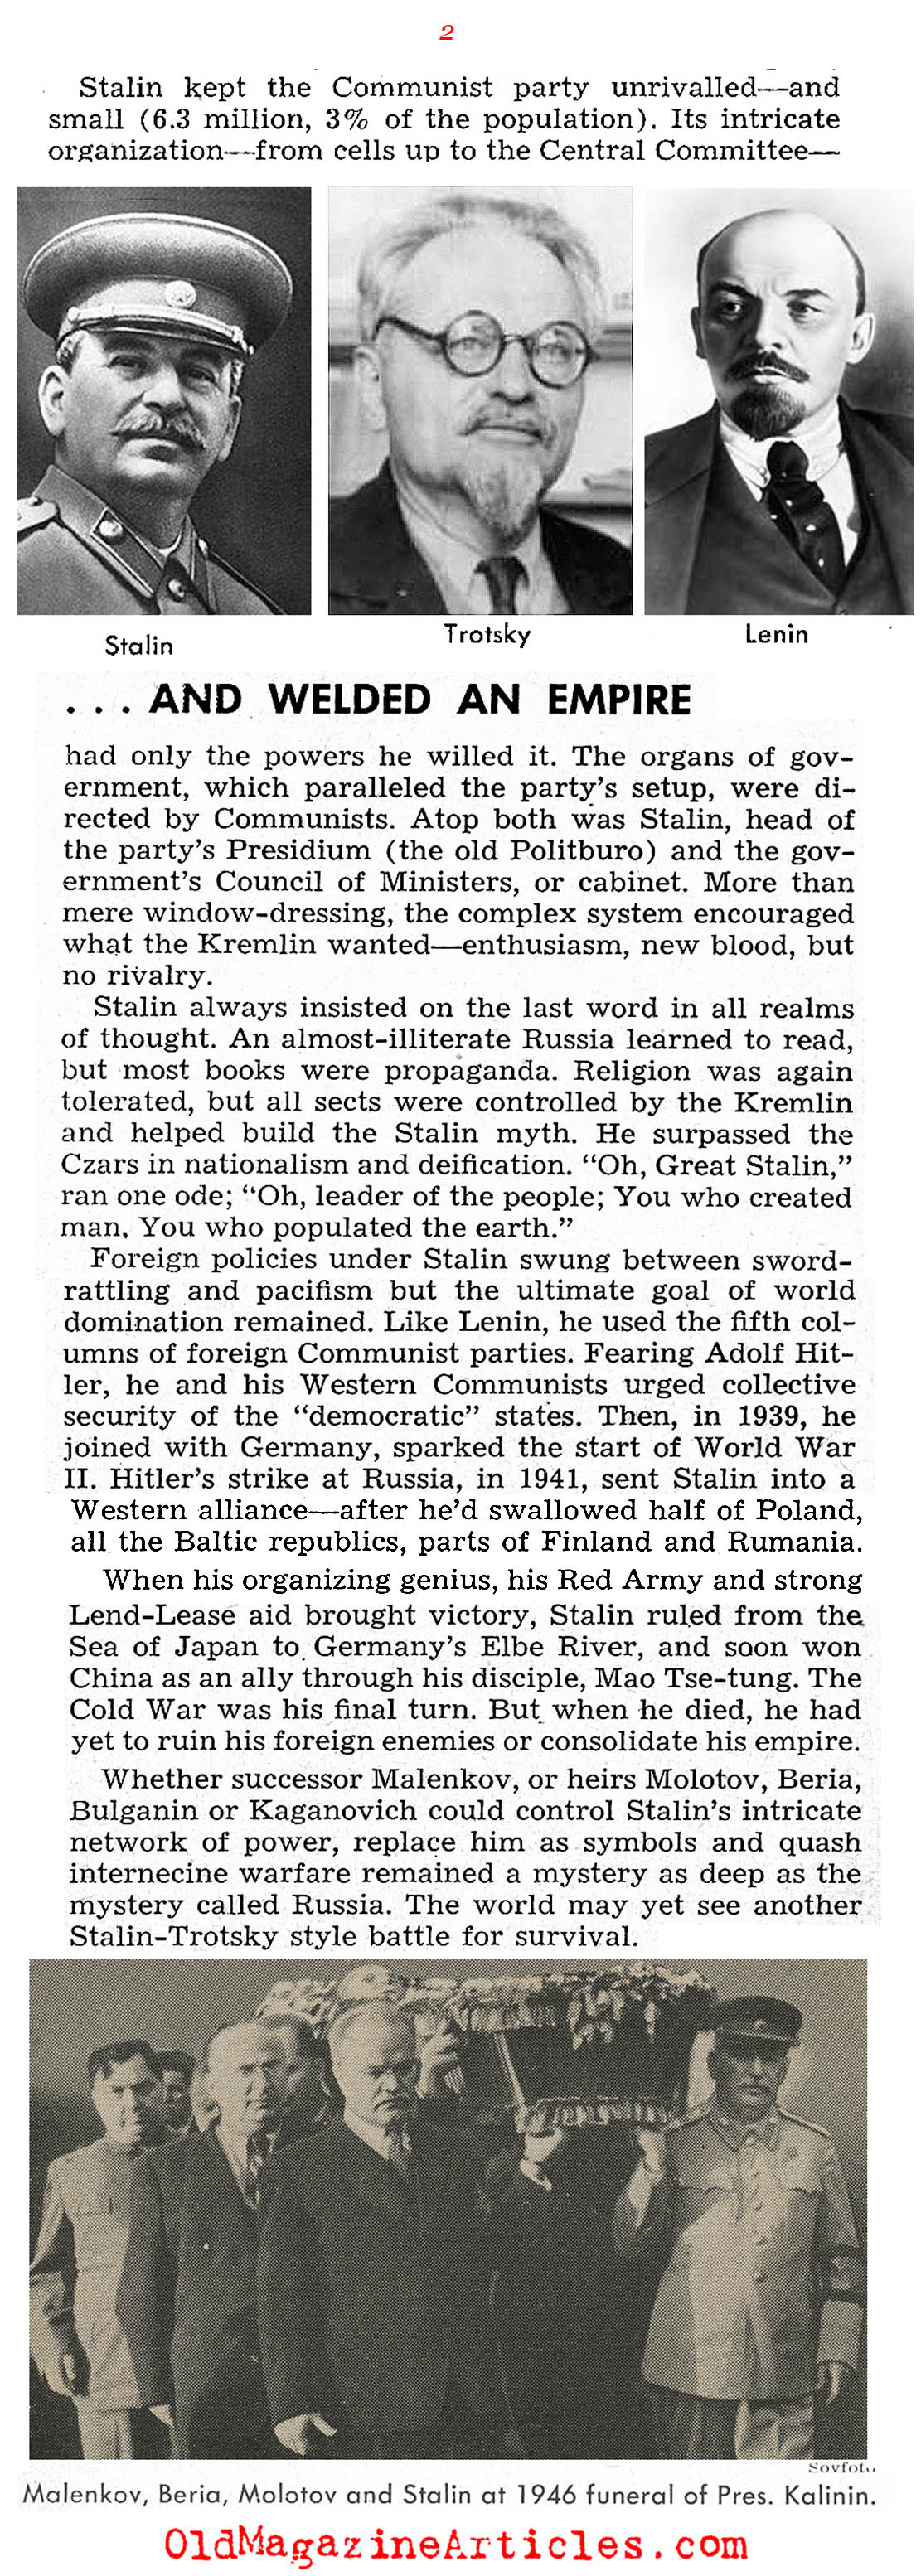 Stalin's Rule Summarized (Quick Magazine, 1953)